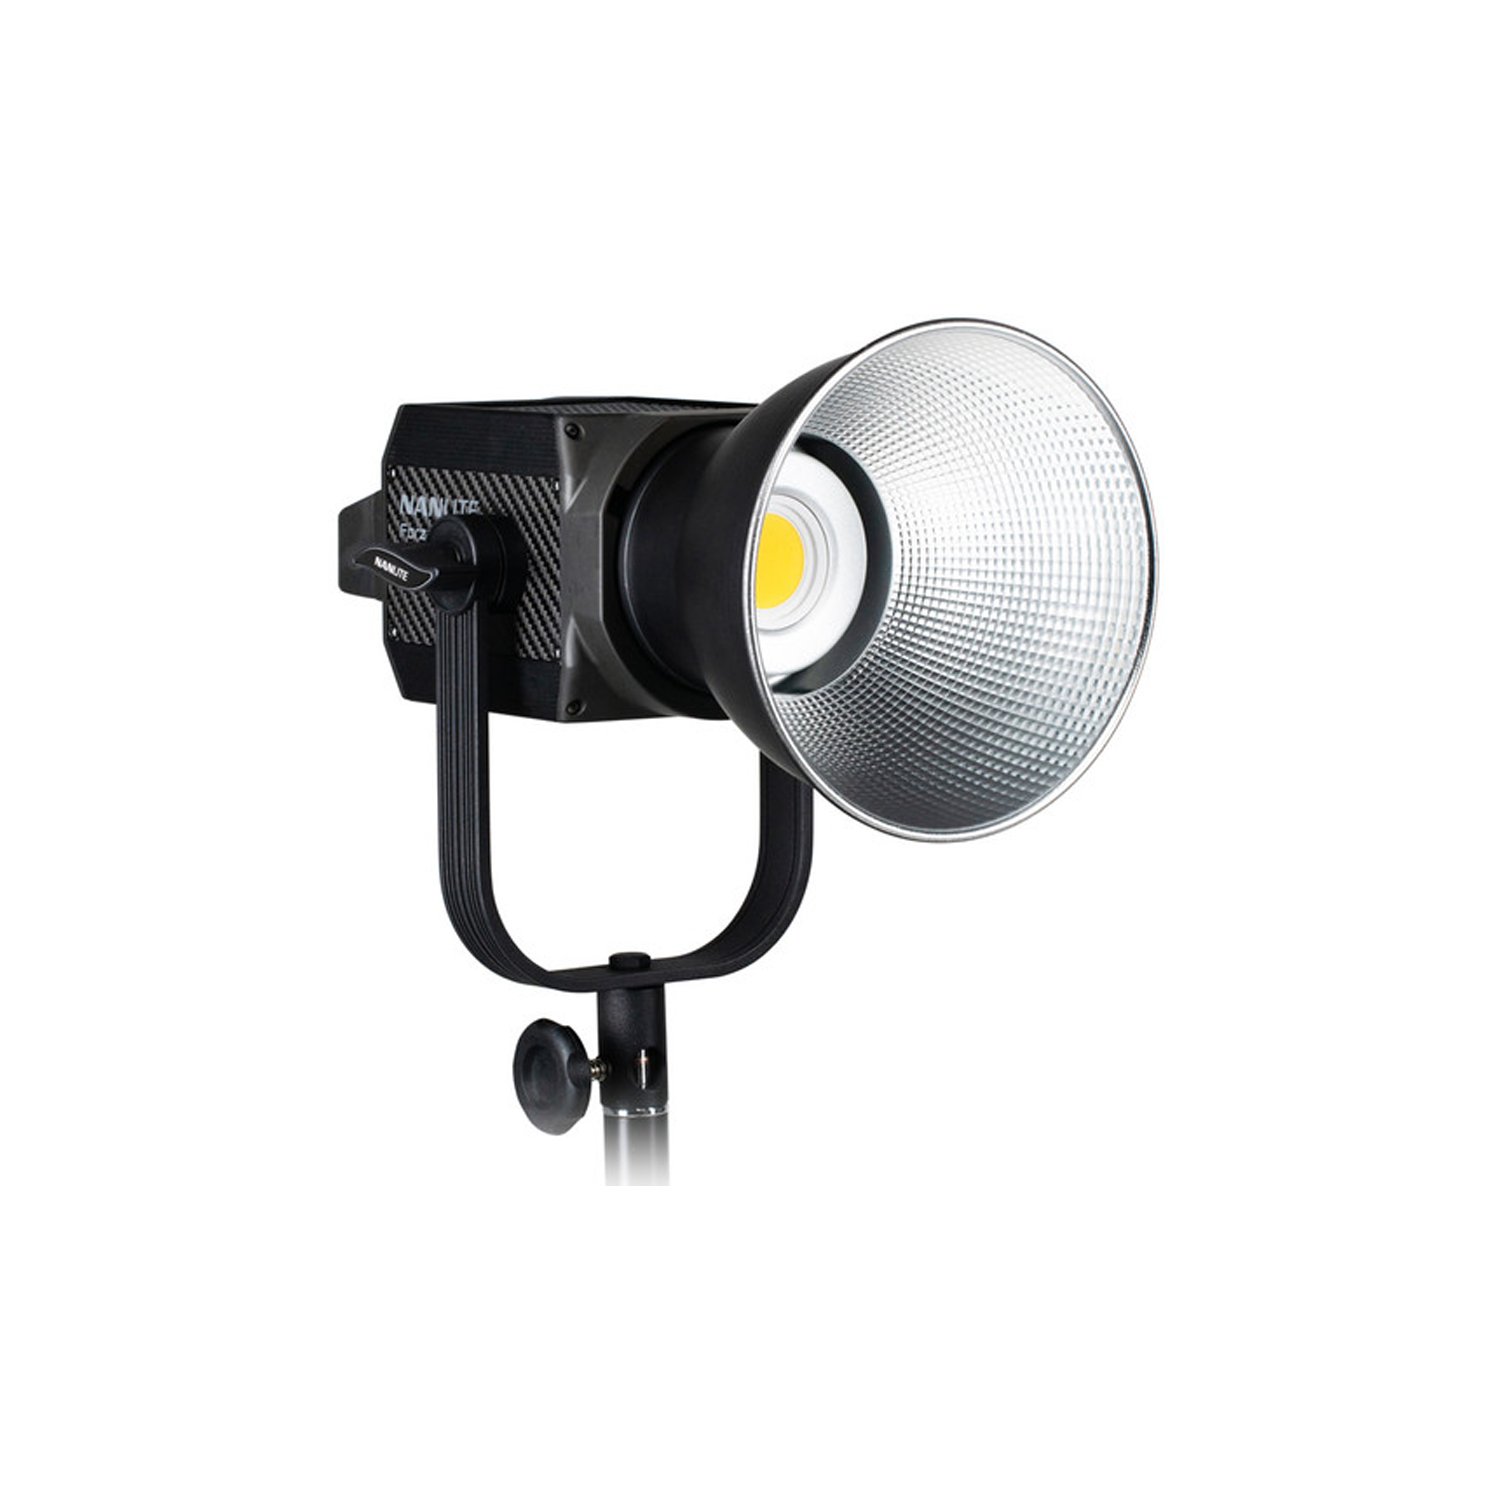 Nanlite Forza 200 Daylight LED Monolight